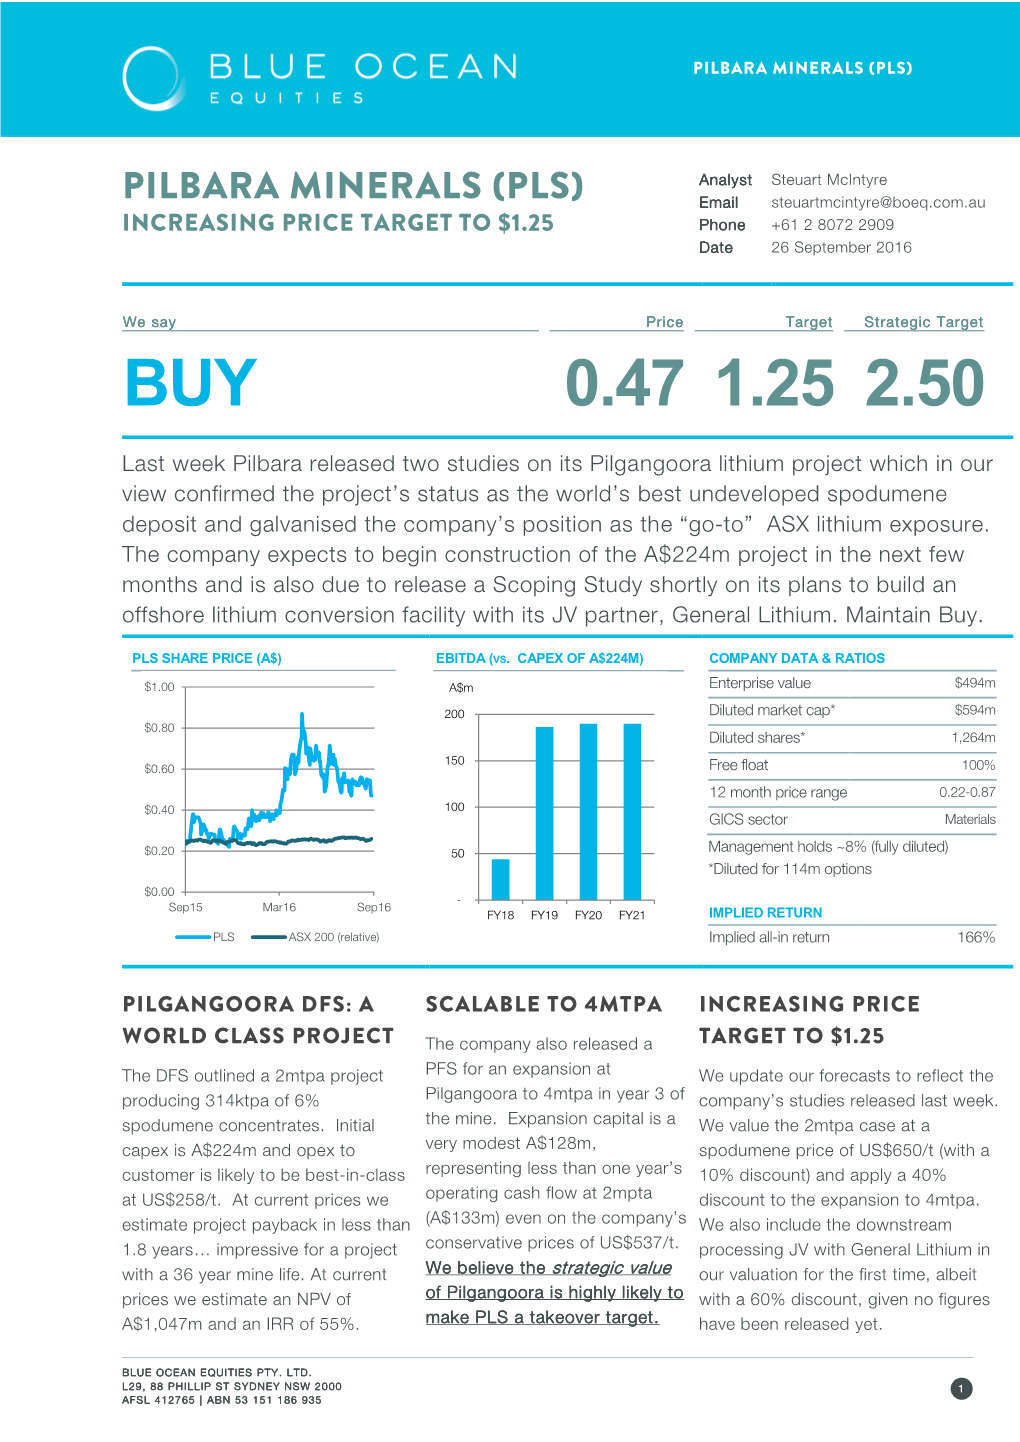 Blue Ocean Equities Report. Increasing Price Target to $1.25